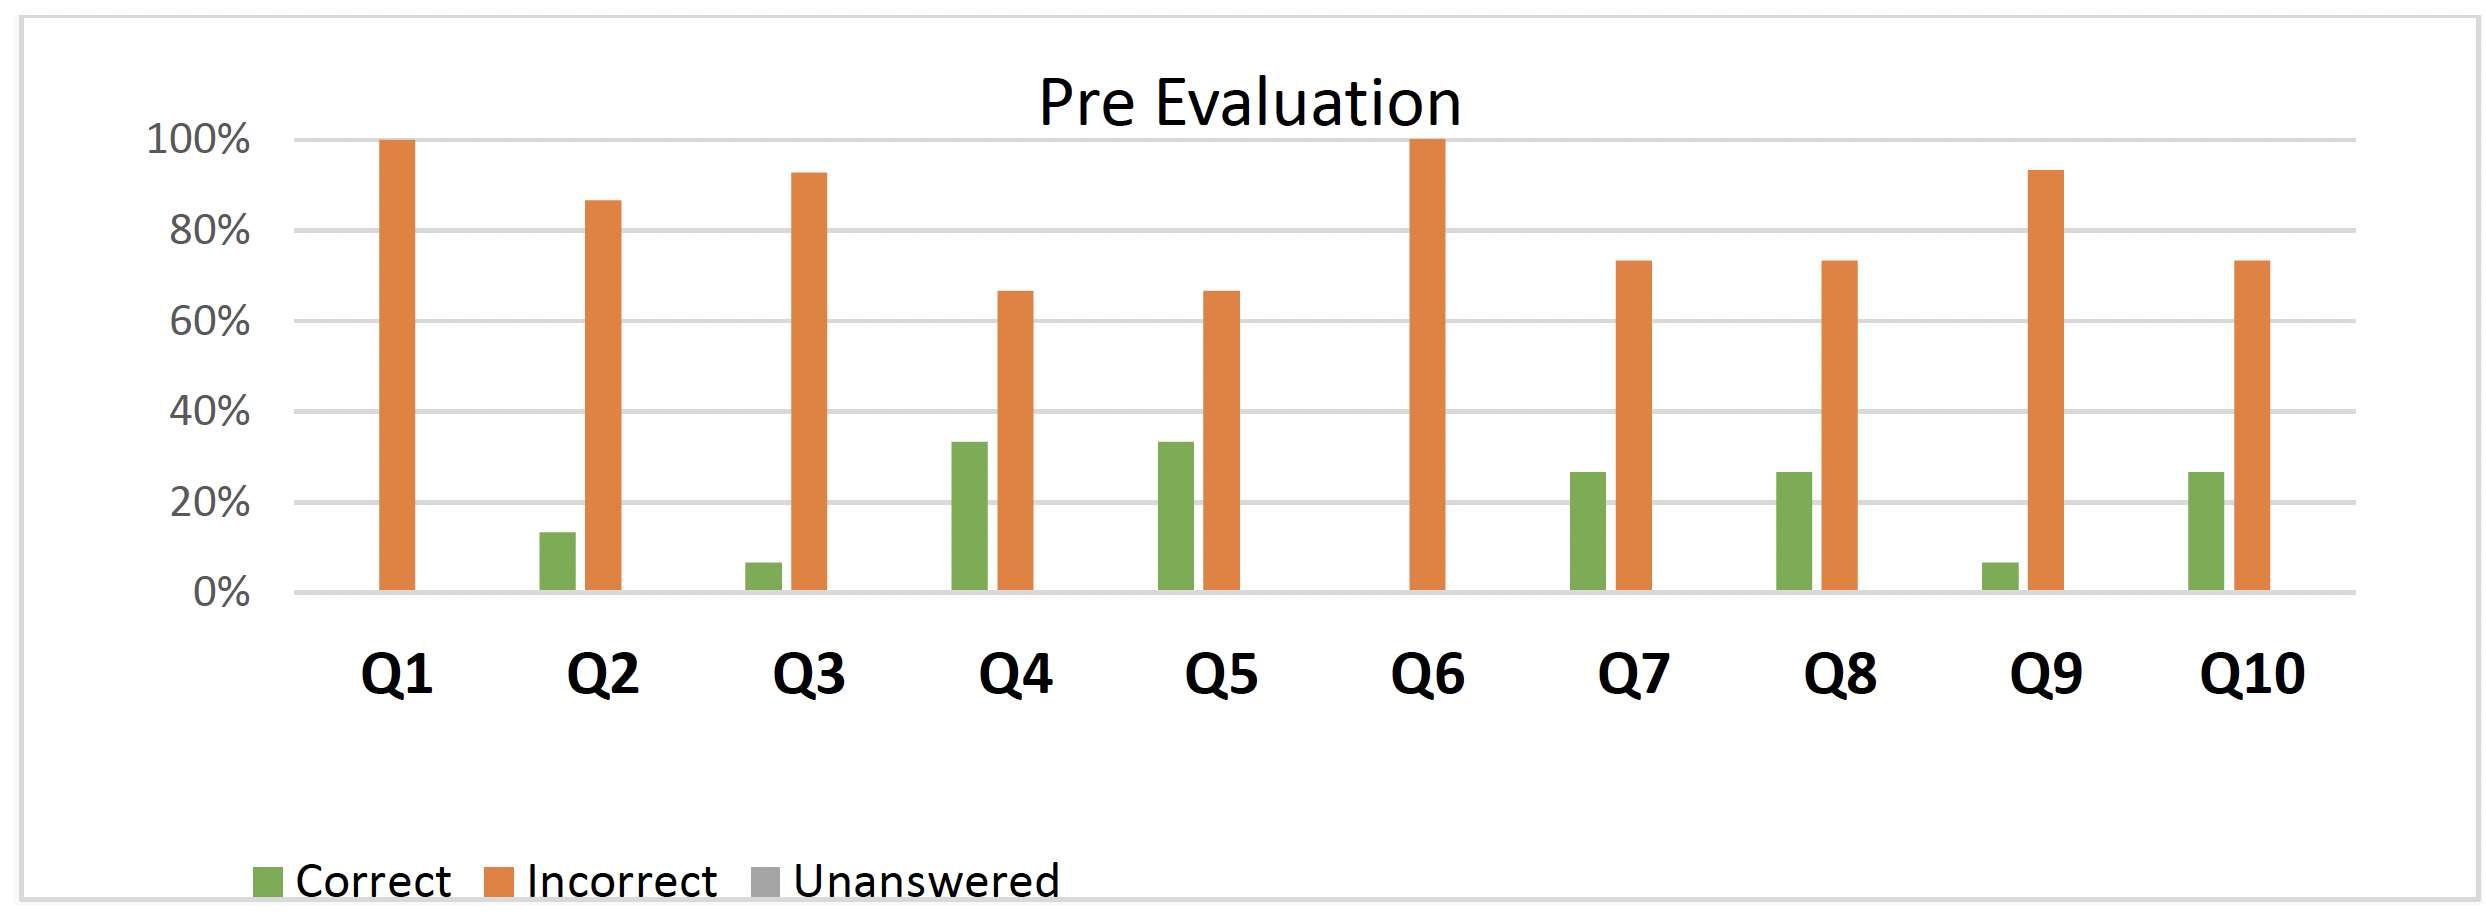 Fig 13: PNT course evaluation scores before class